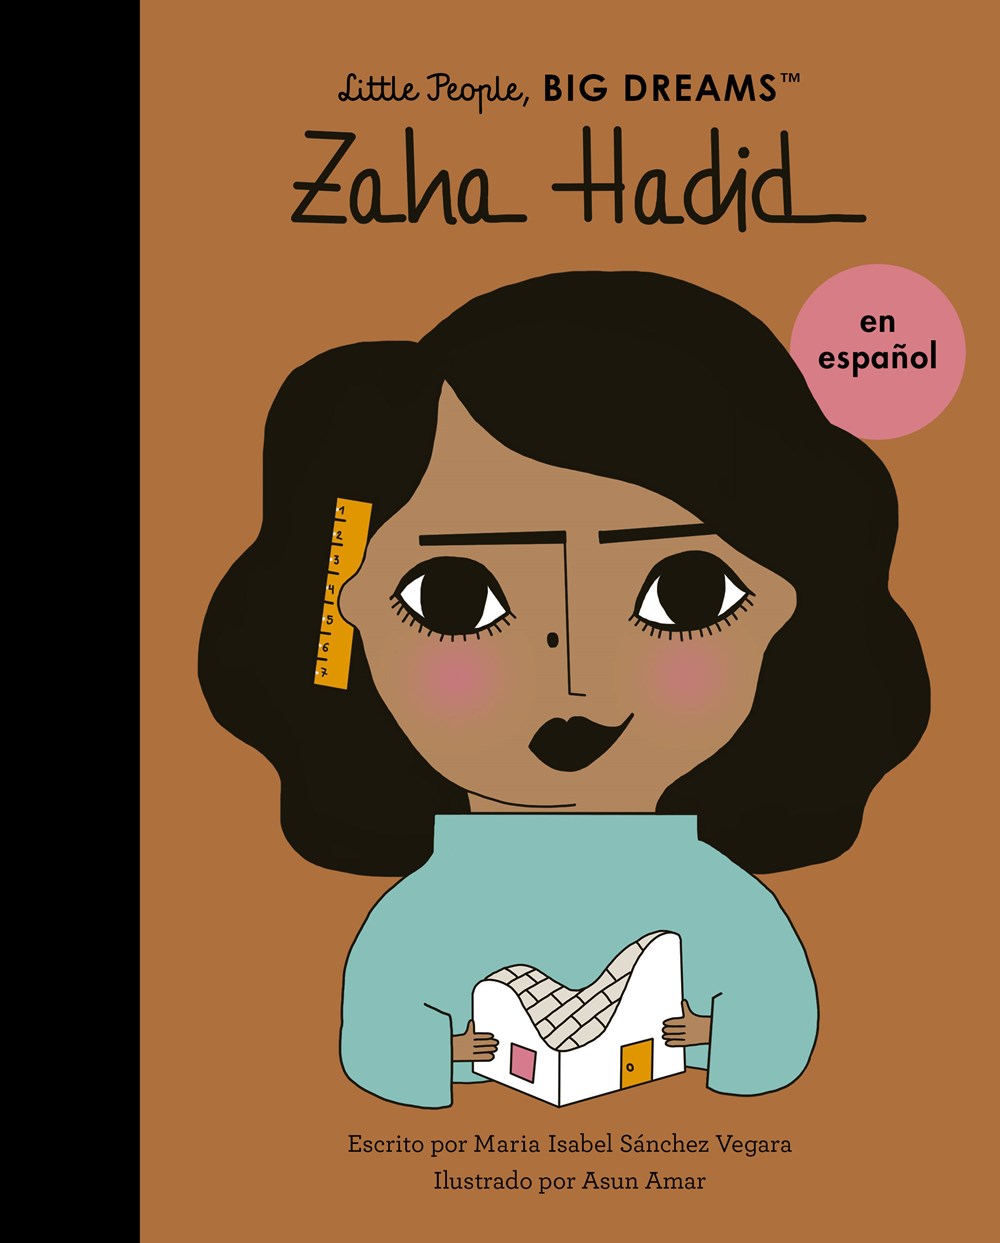 Little People, Big Dreams en Español: Zaha Hadid (Pasta Blanda / Paperback)